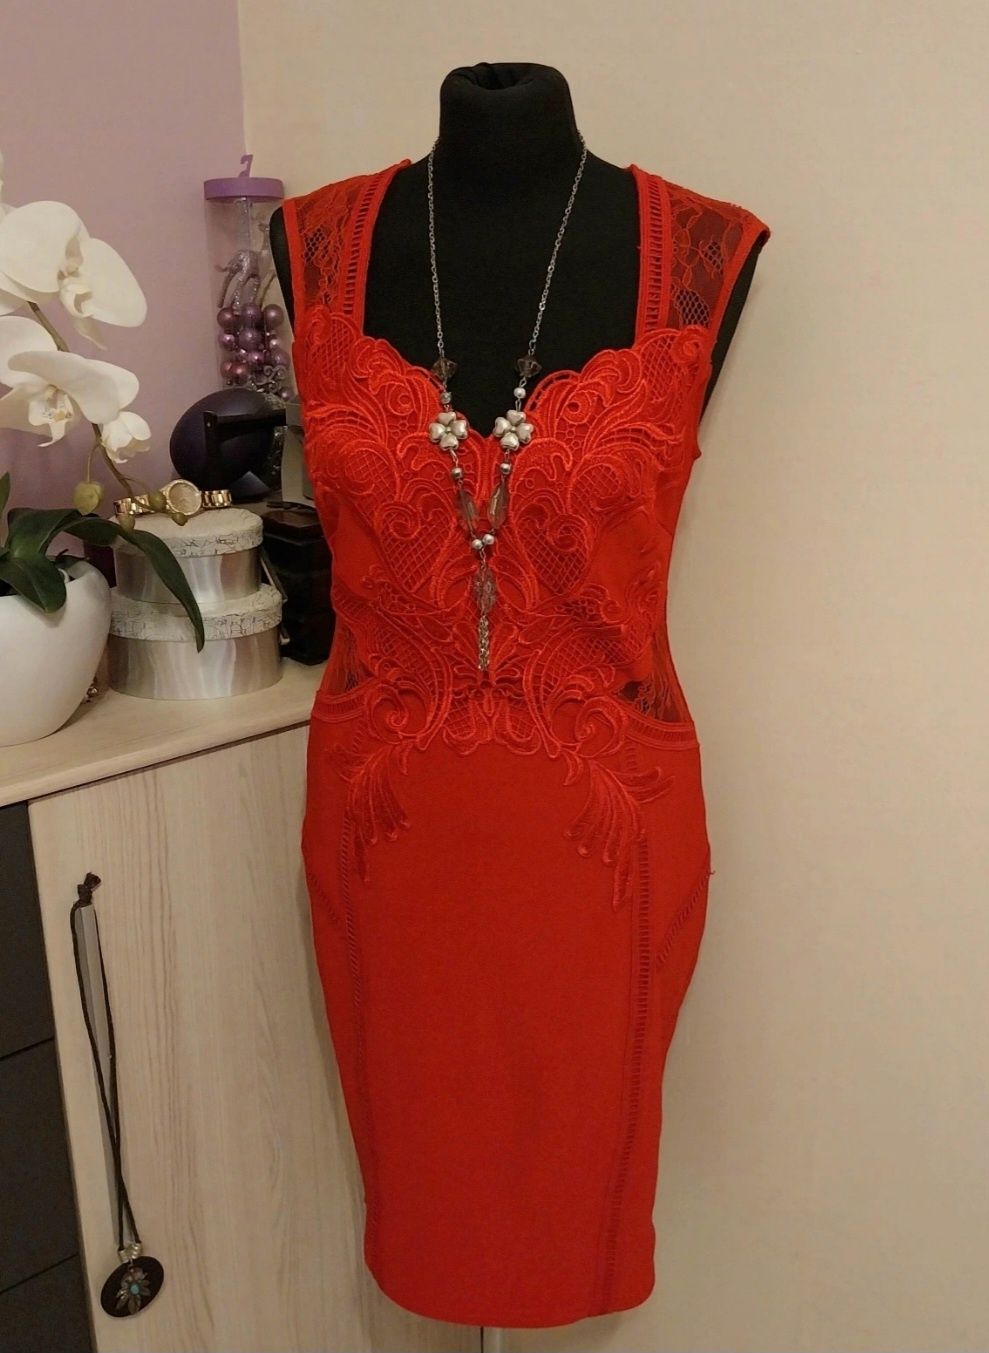 Cudowna czerwona elegancka sukienka  koktajlowa